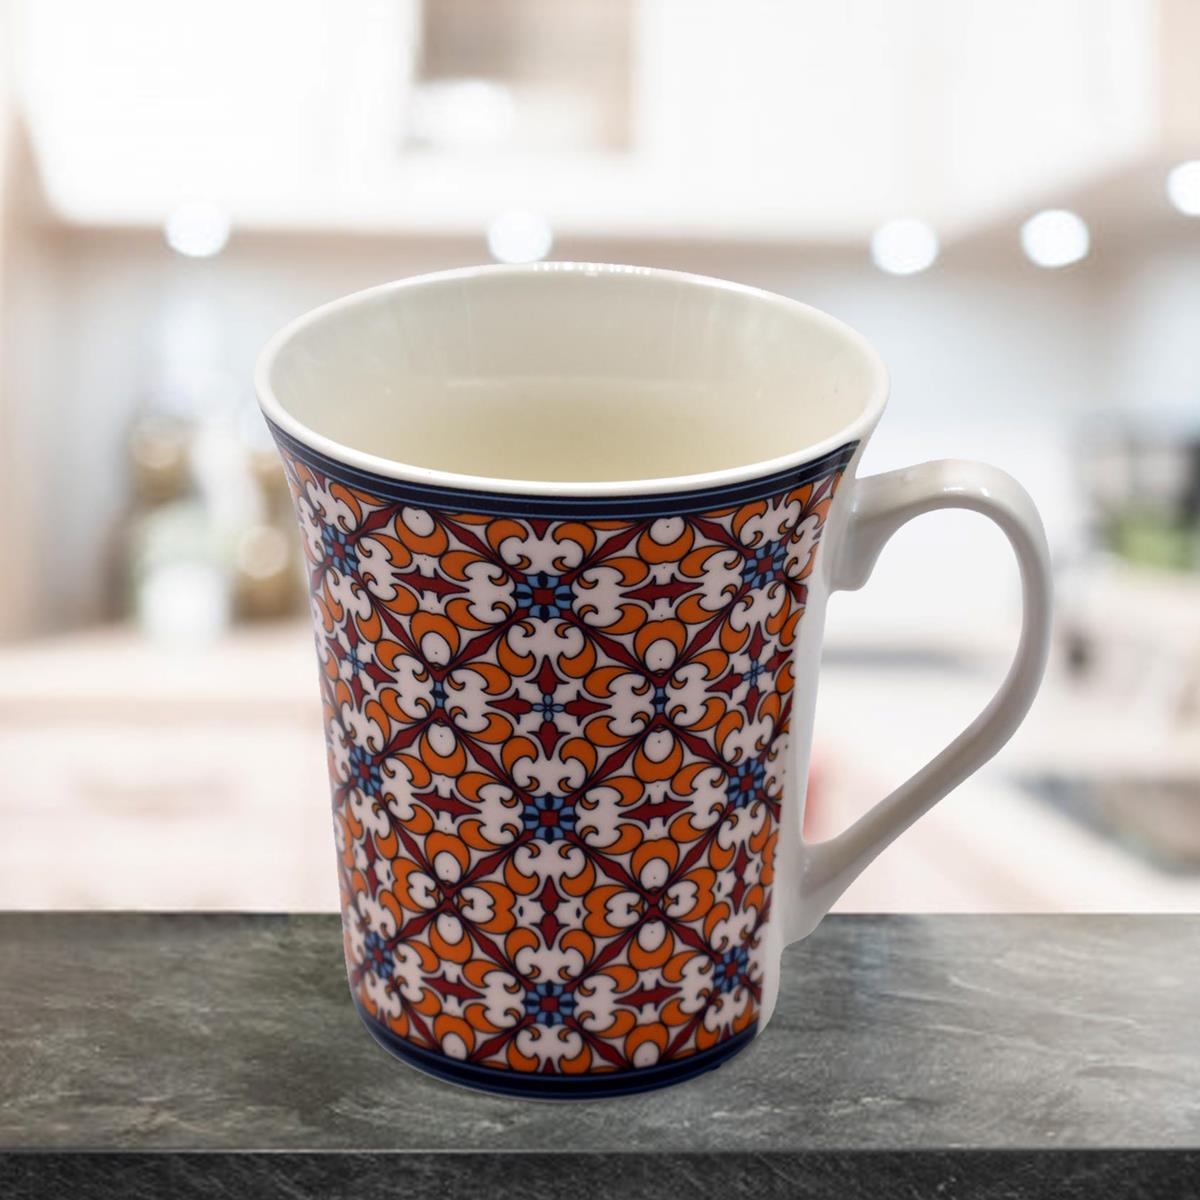 Printed Ceramic Tall Coffee or Tea Mug with handle - 325ml (BPM4430-A)